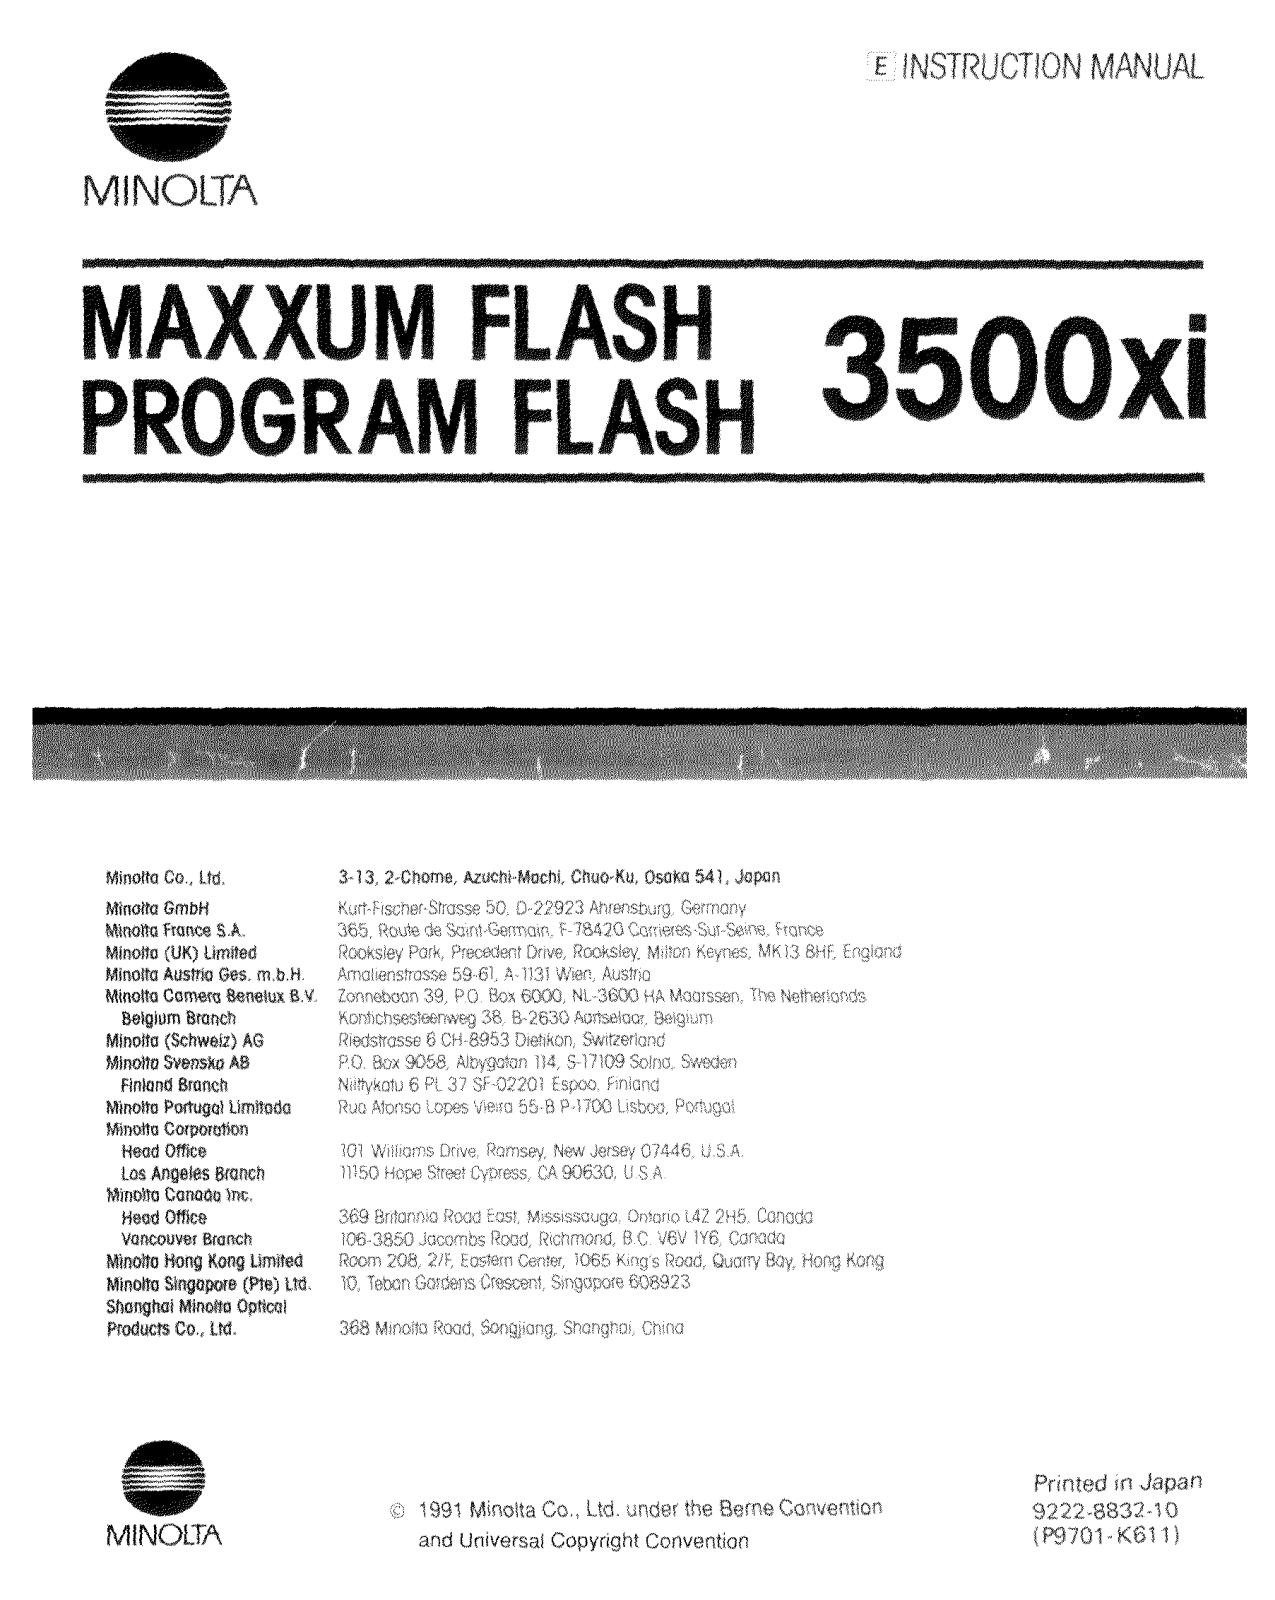 Minolta MAXXUM FLASH 3500XI instruction Manual